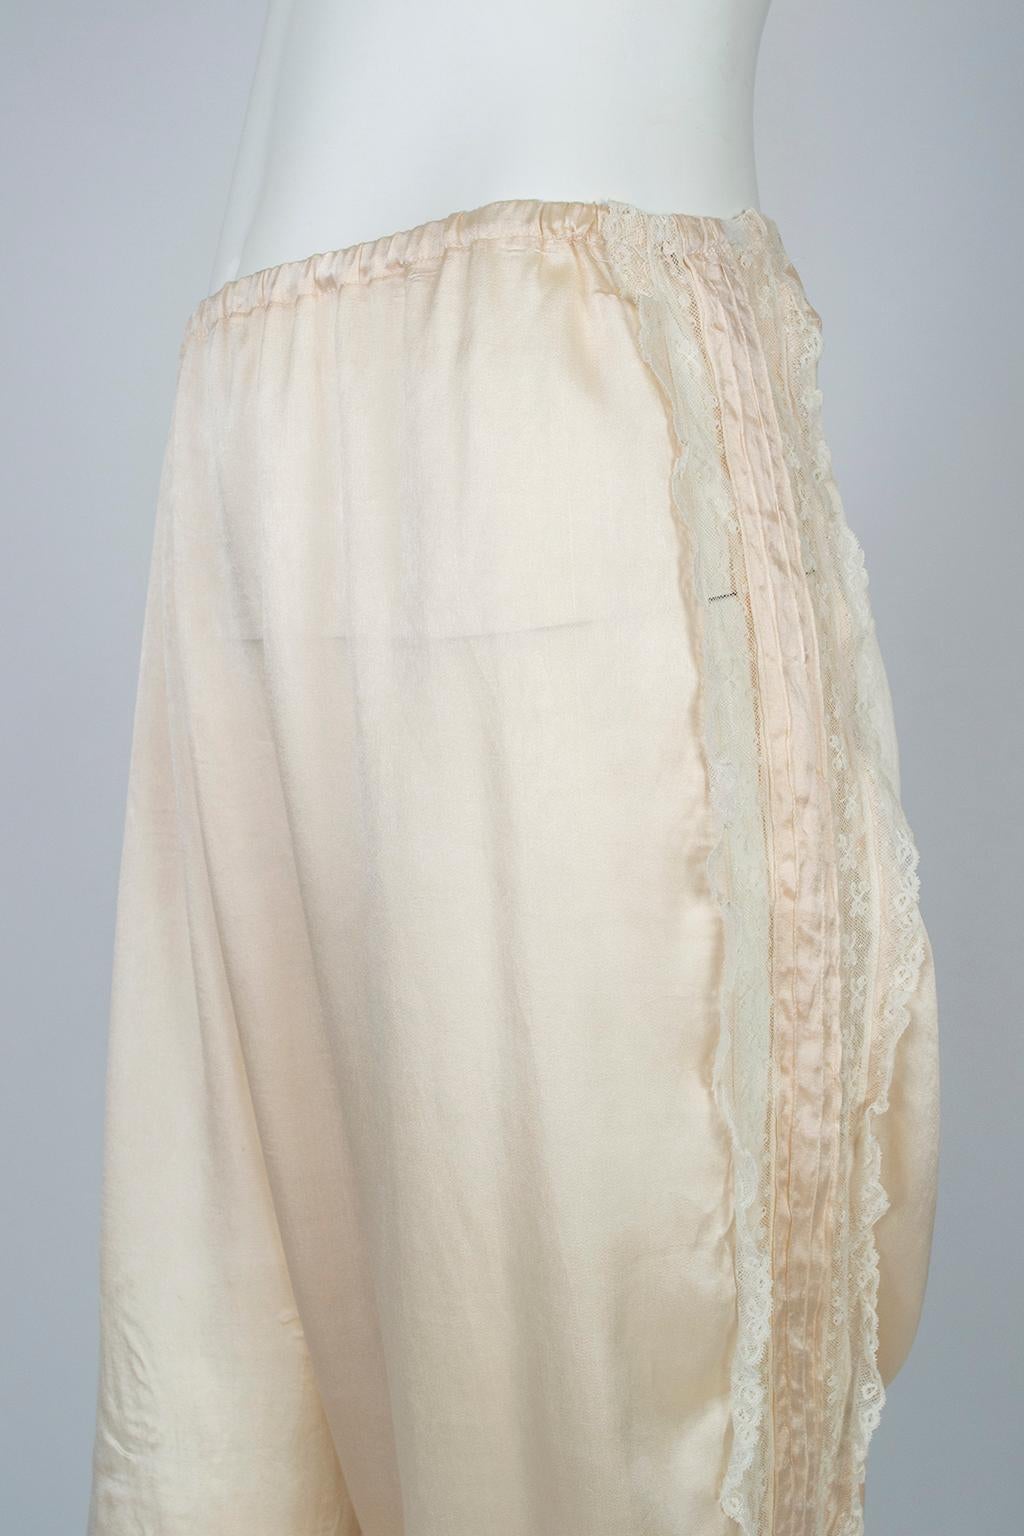 Women's Edwardian Blush Silk Charmeuse and Lace ¾ Bloomer Pantalettes - Medium, 1900s